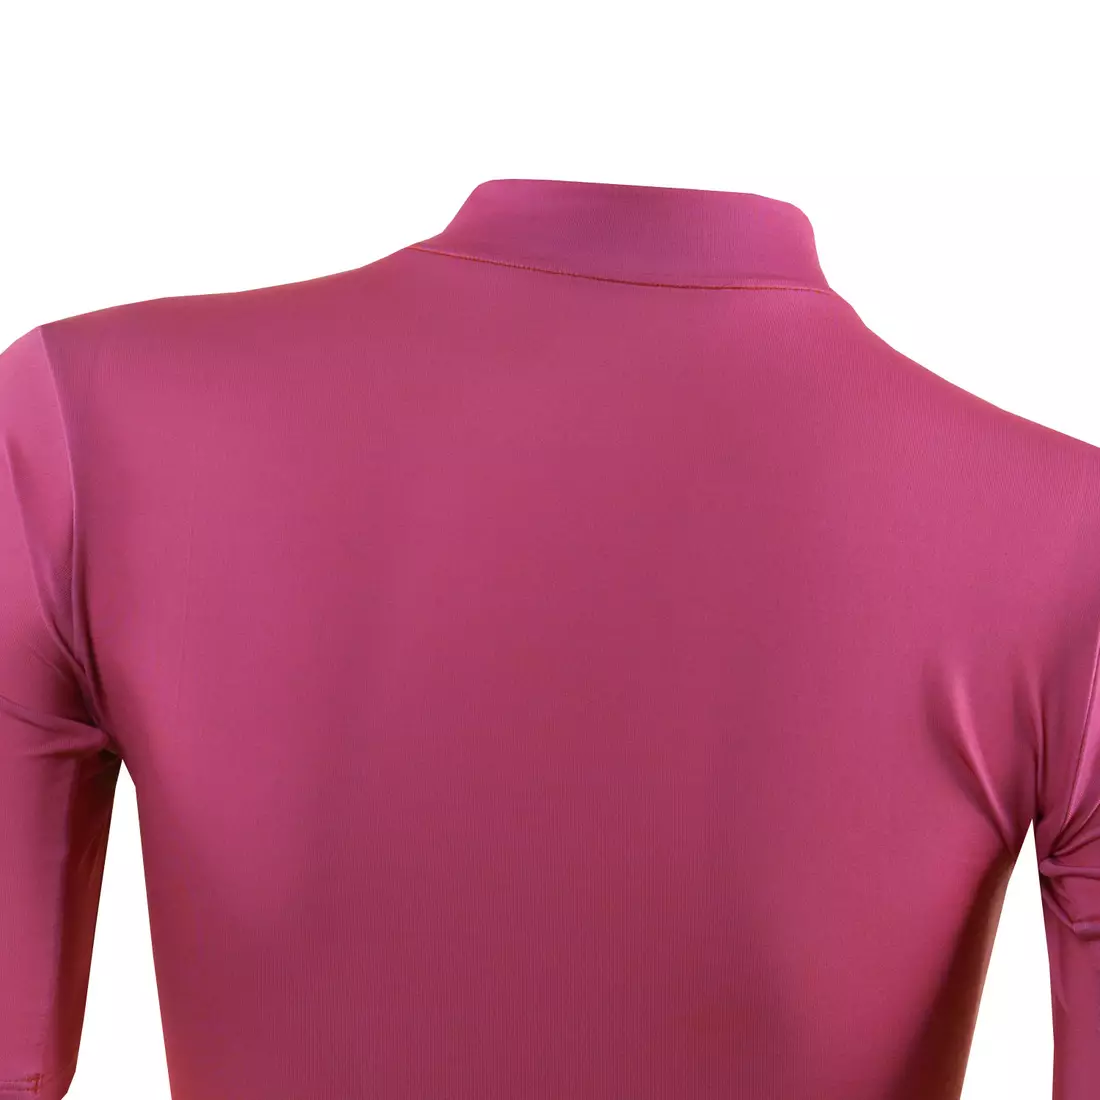 KAYMAQ dámský cyklistické dres krátký rukáv růžová KYQ-SS-2001-2